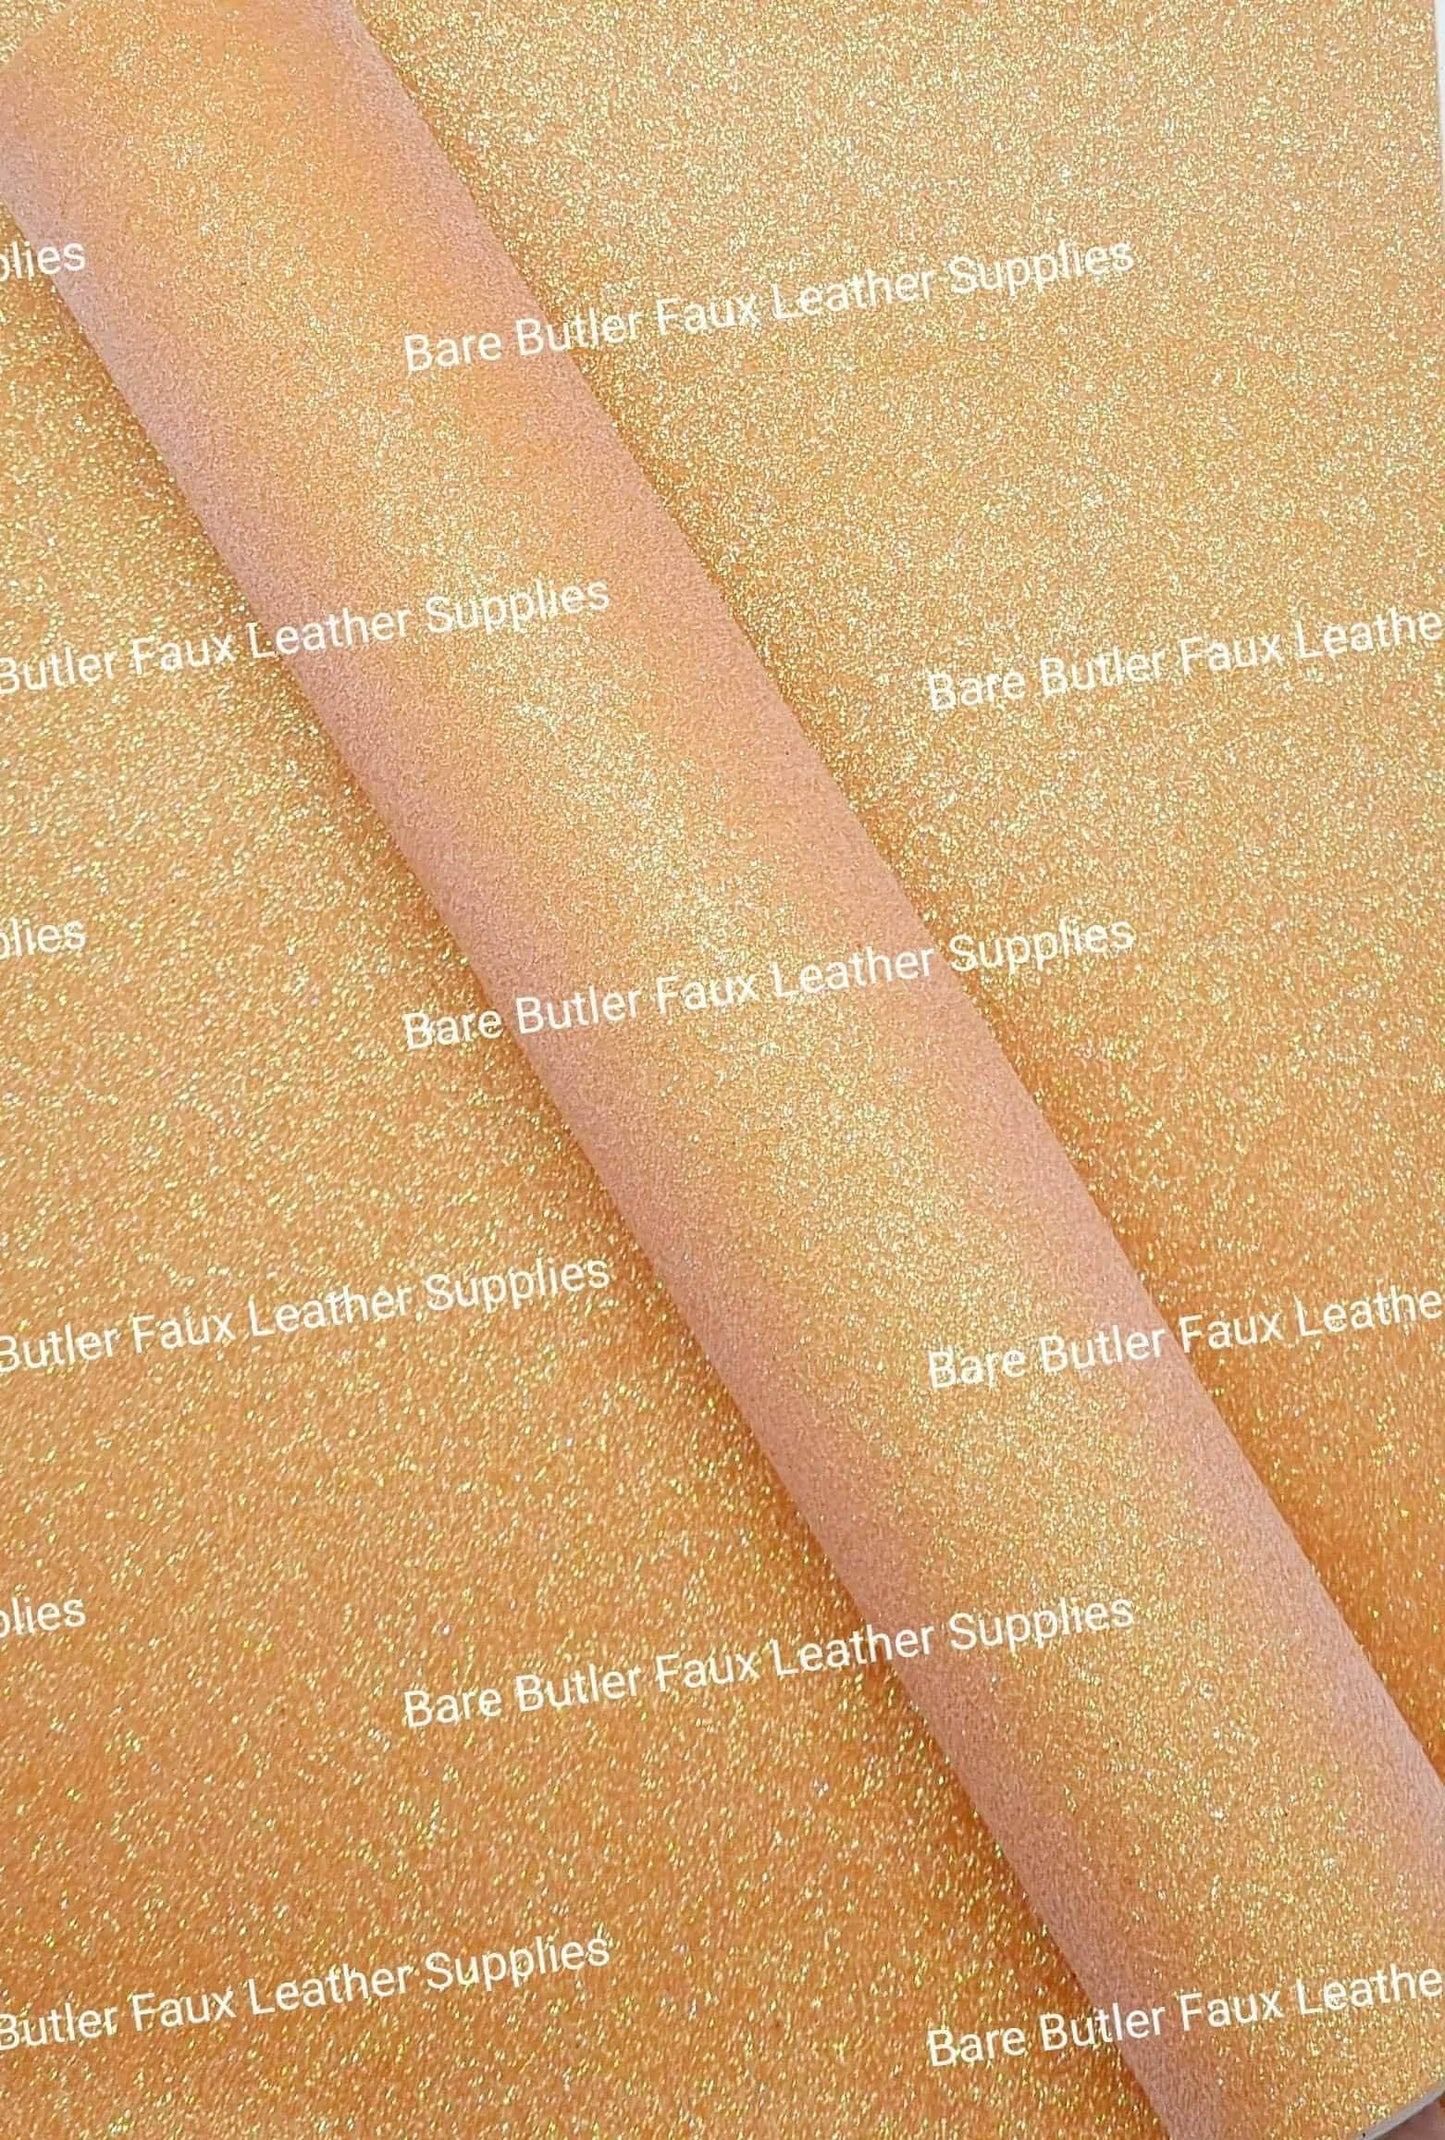 Glitter - Peach - Berry, Faux, Faux Leather, Fine, Glitter, Leather, leatherette, Super - Bare Butler Faux Leather Supplies 